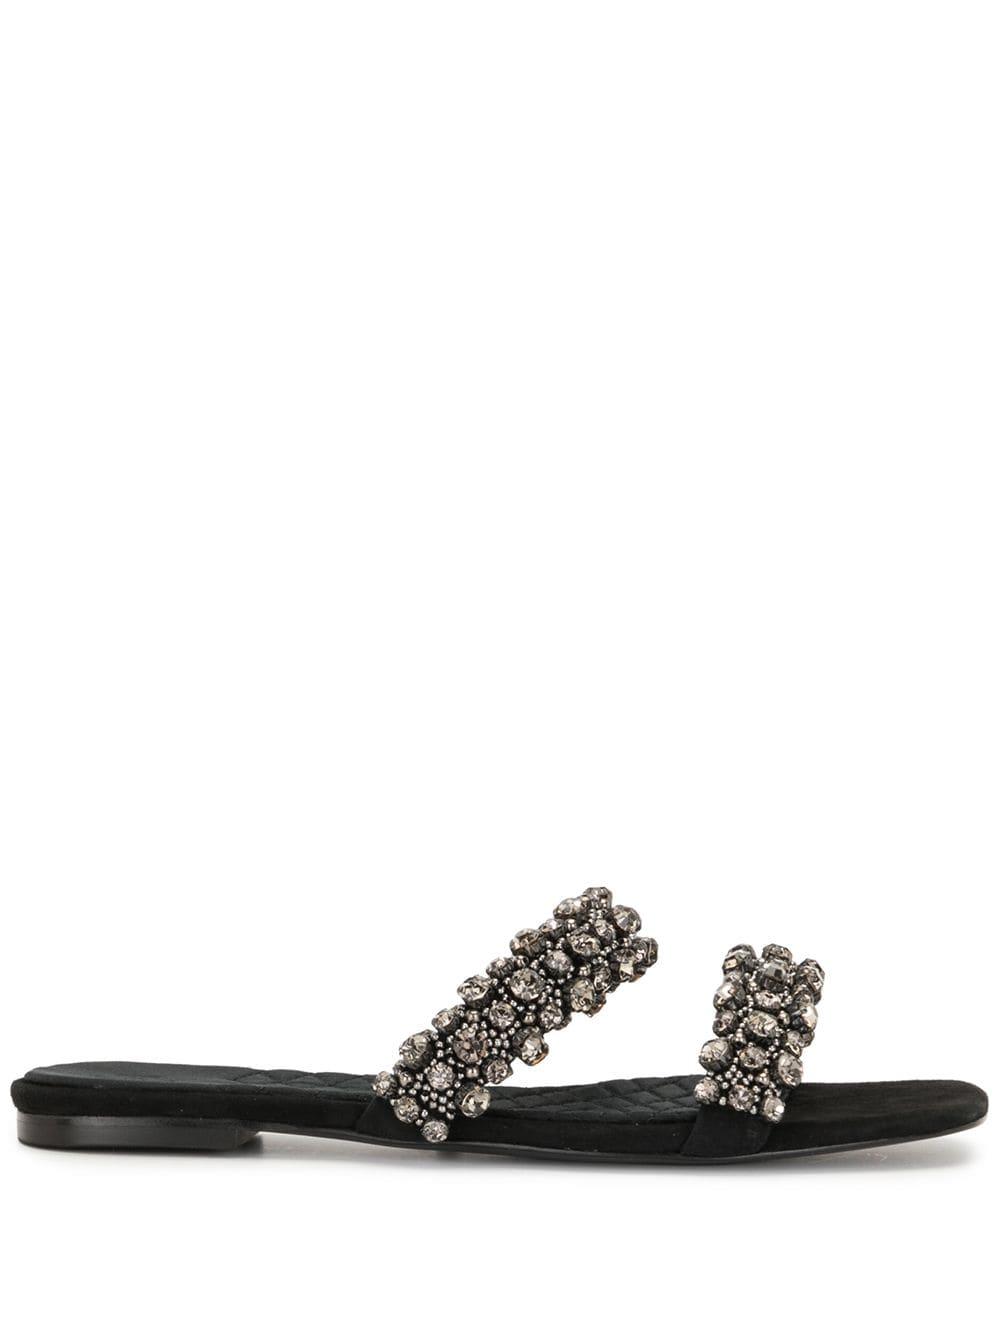 Tory Burch Crystal 5mm Slide Sandals in Black | Lyst